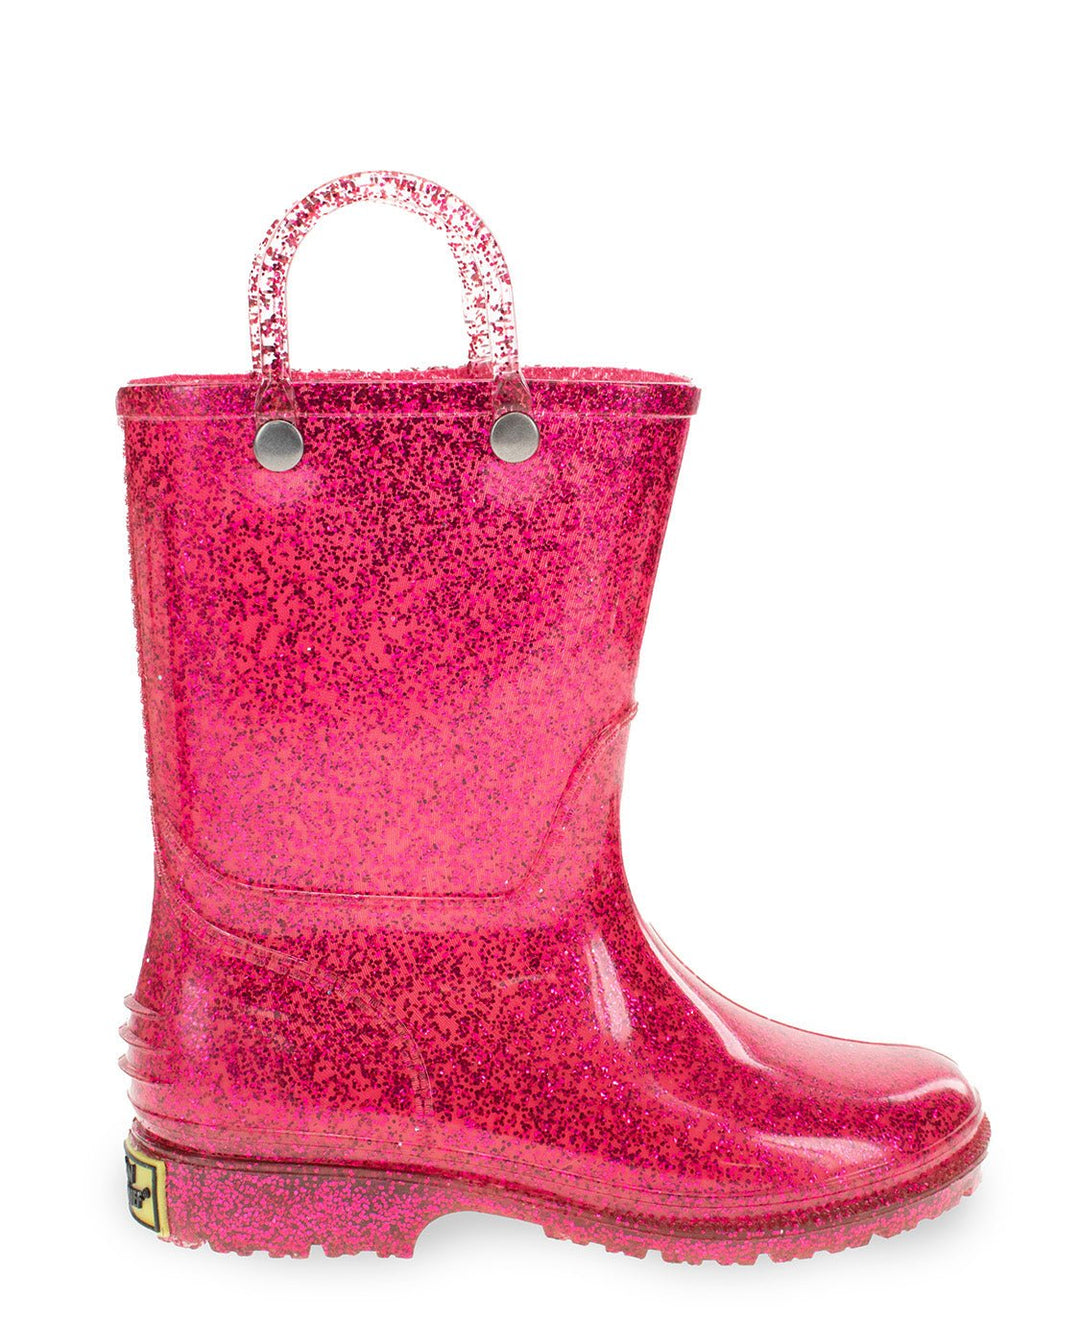 Kids Glitter Rain Boot - Pink - Western Chief